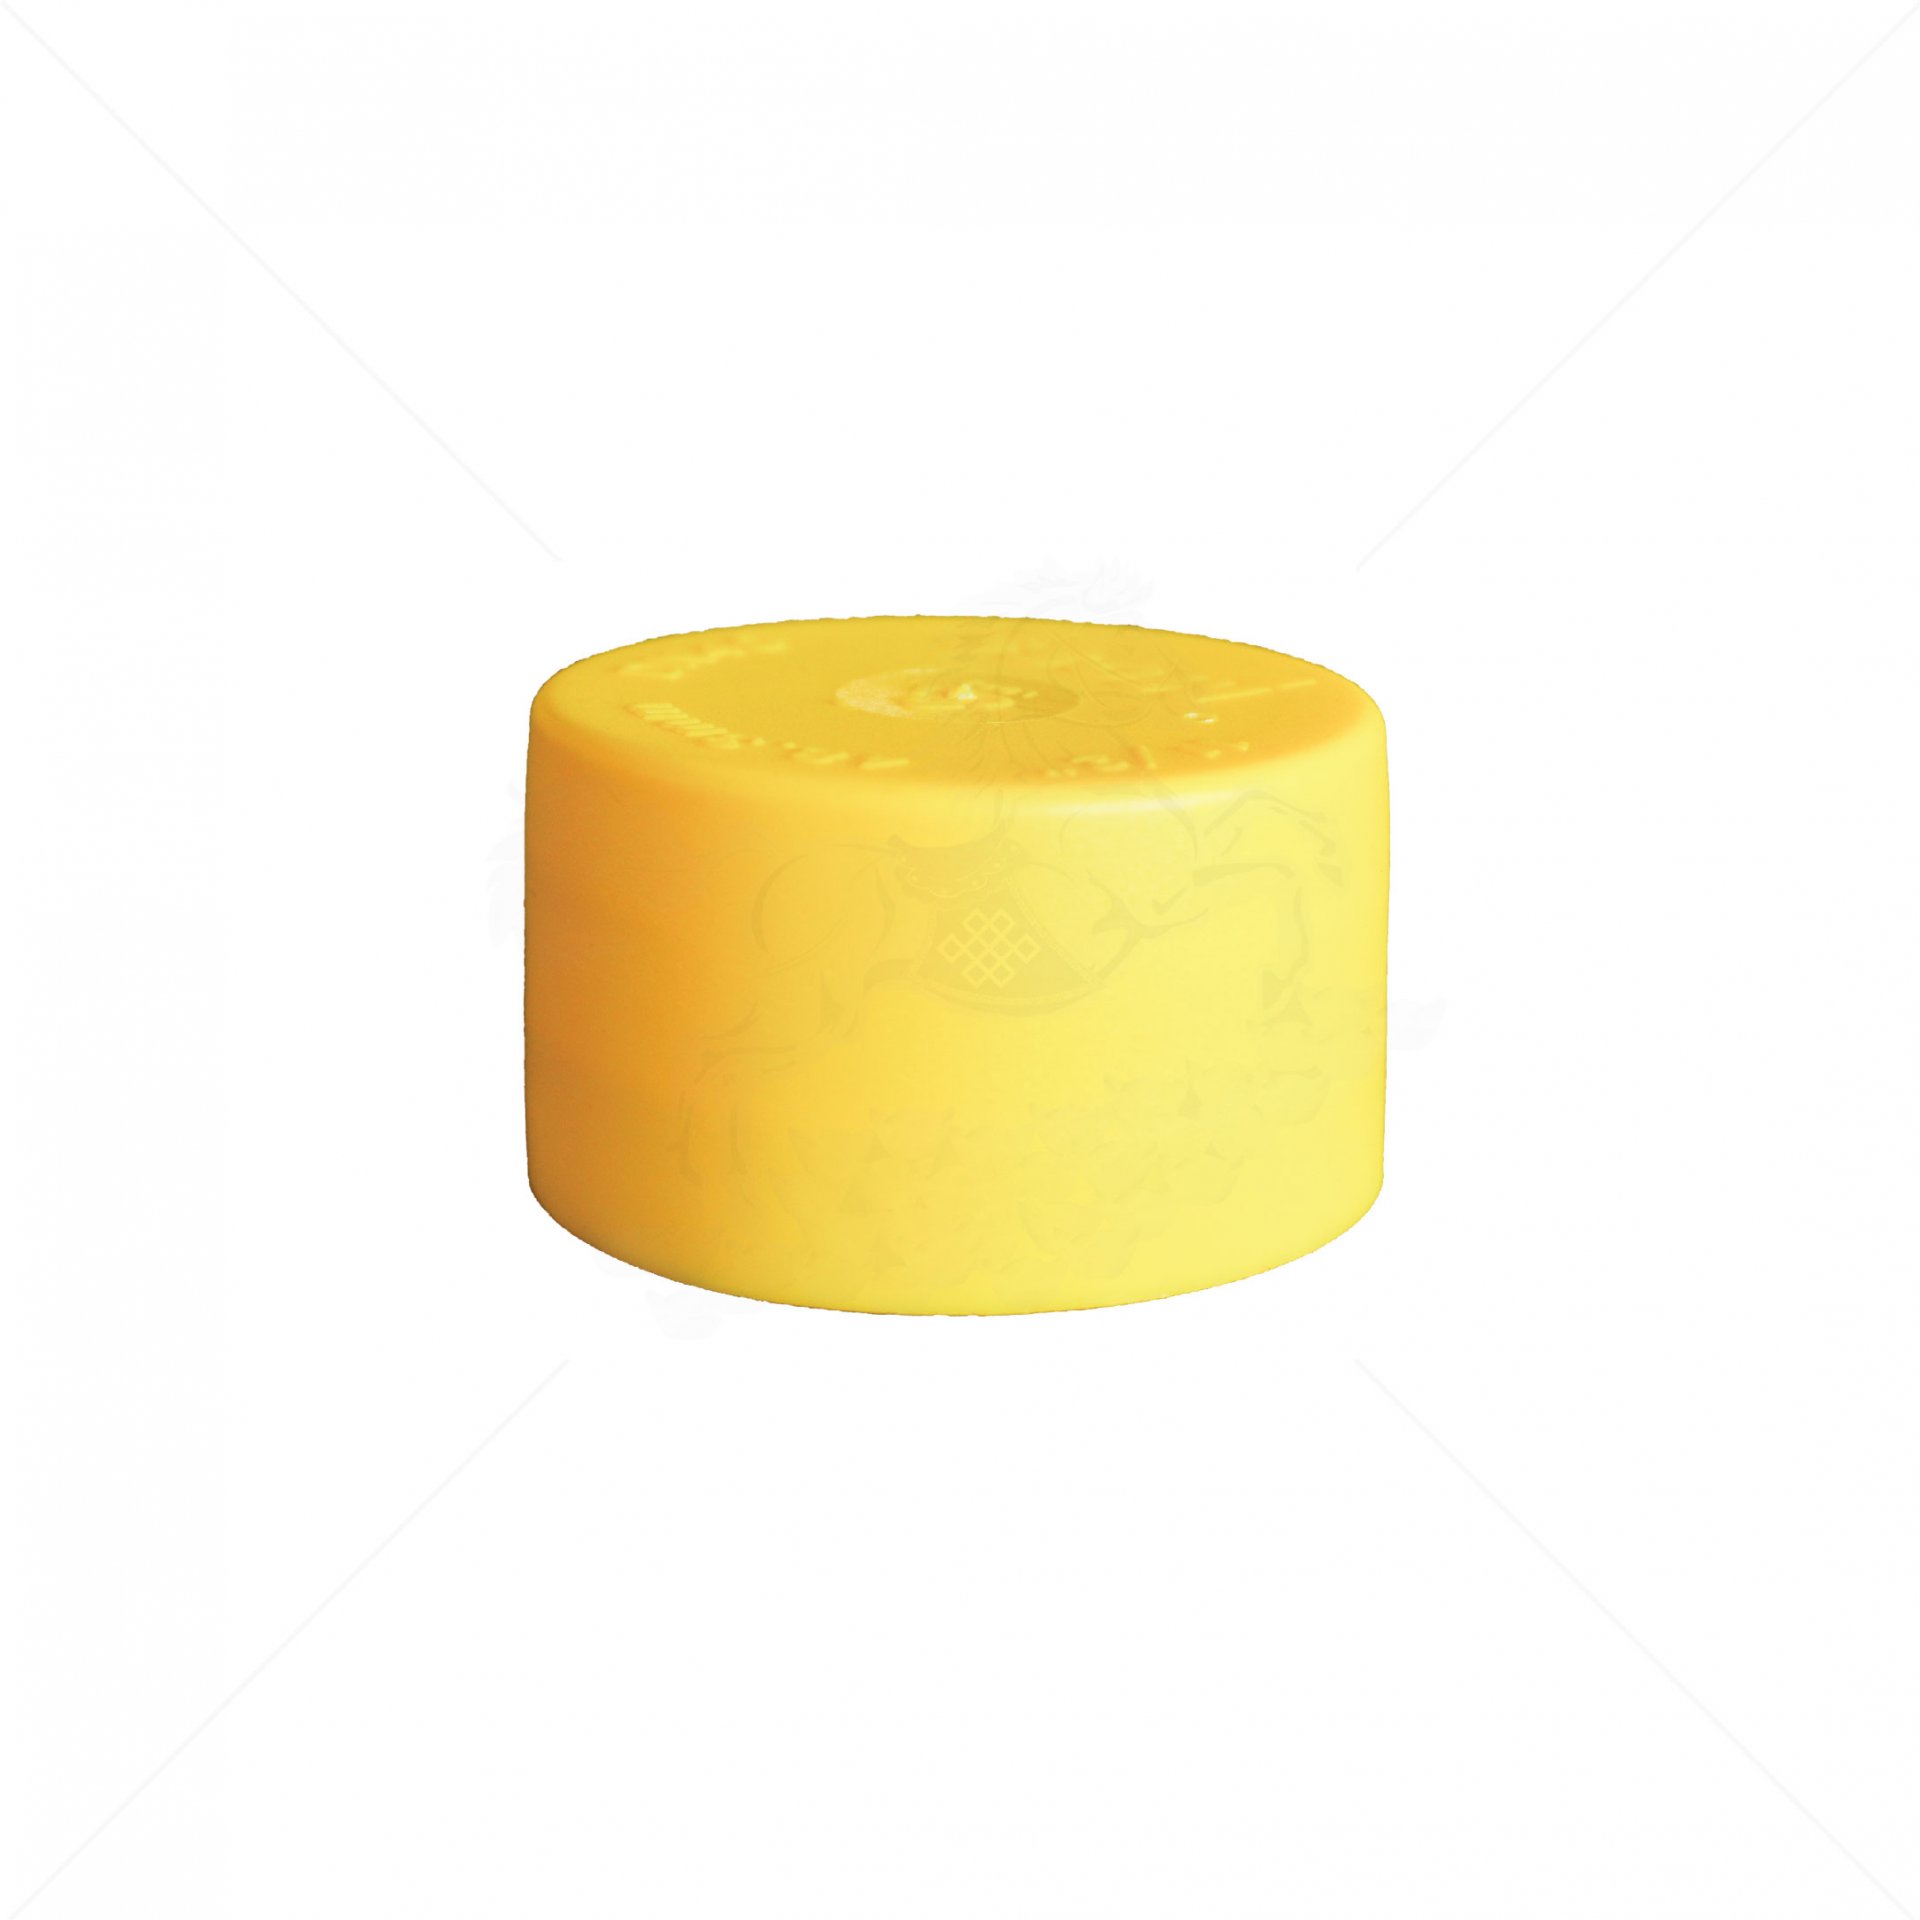 Plastic Cap ครอบปลายท่อ สีเหลือง